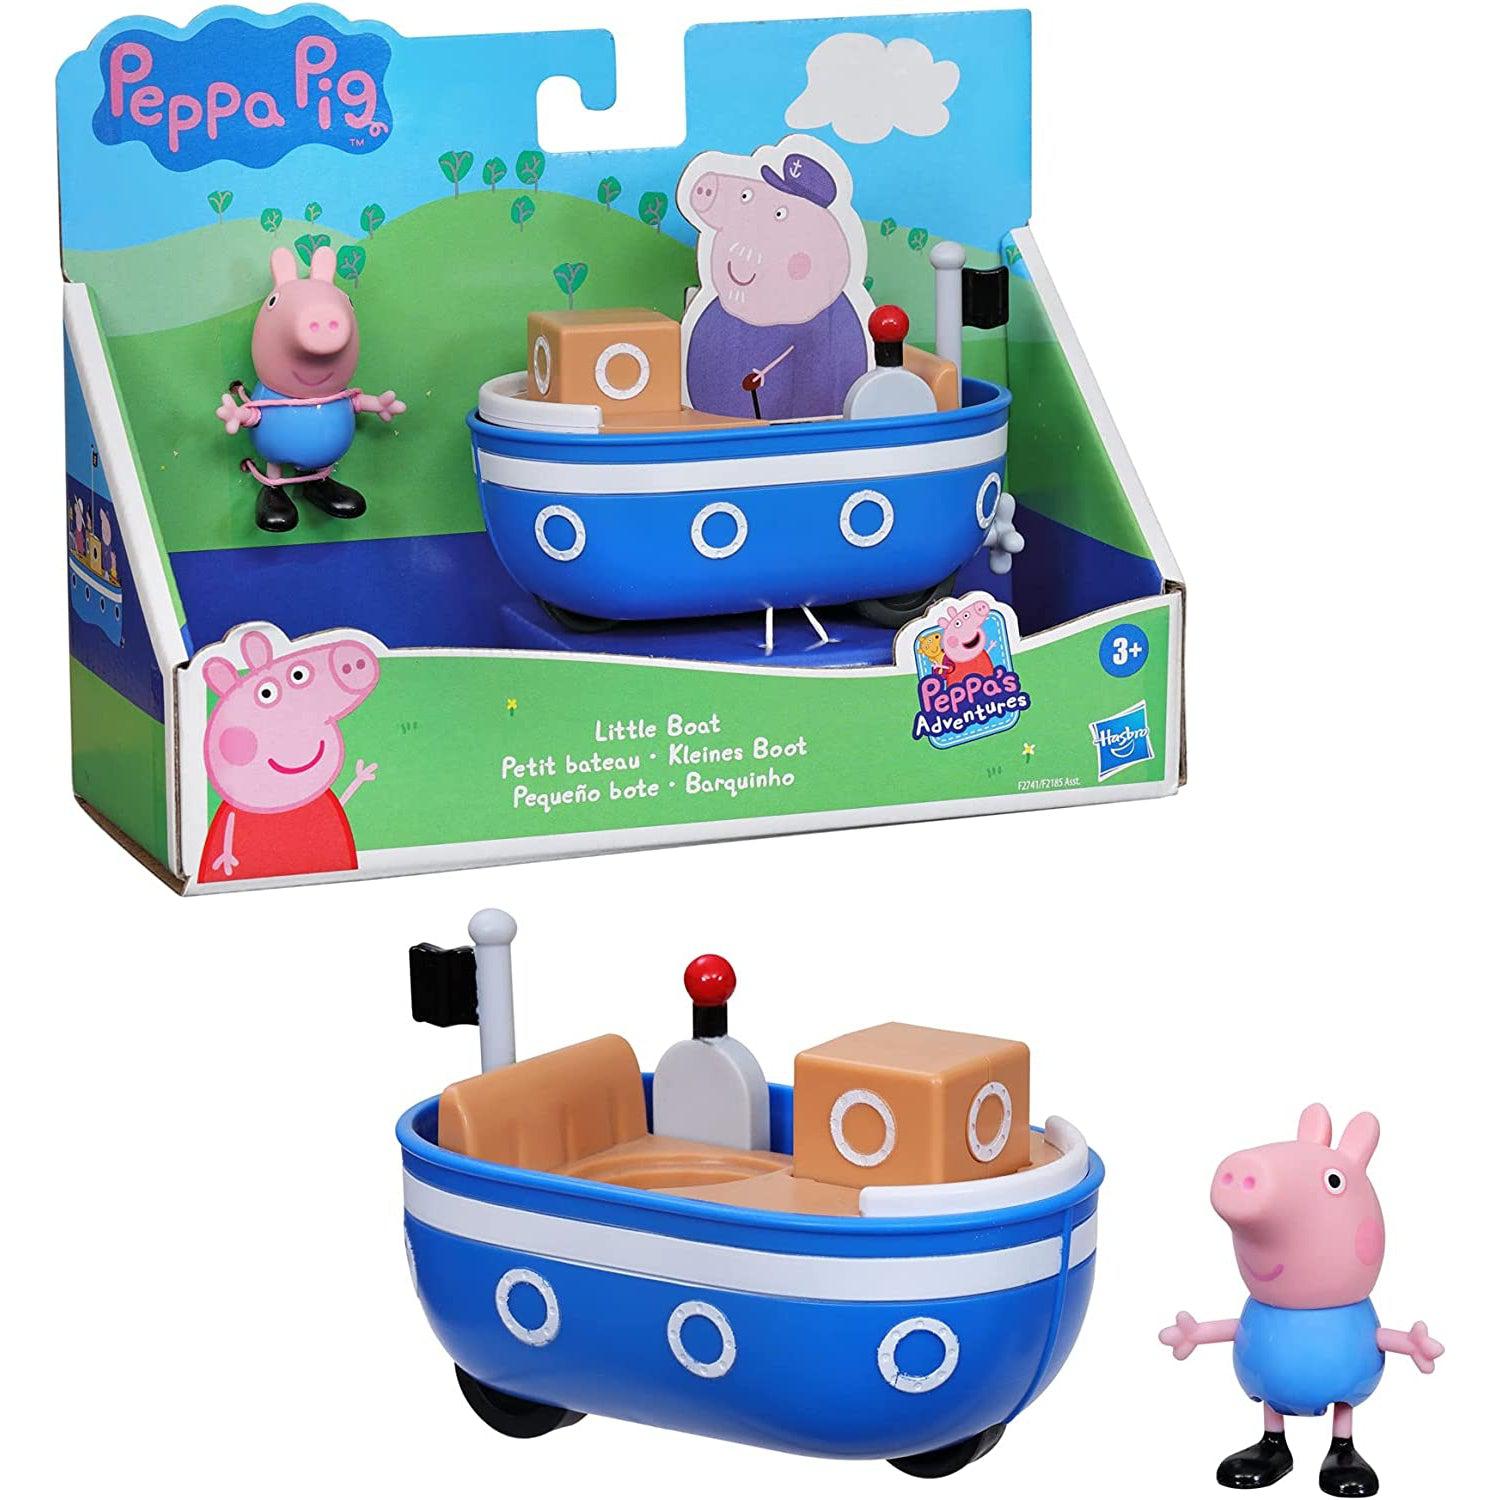 Hasbro-Peppa Pig Peppa's Adventure Little Boat Toy-F2741-Legacy Toys